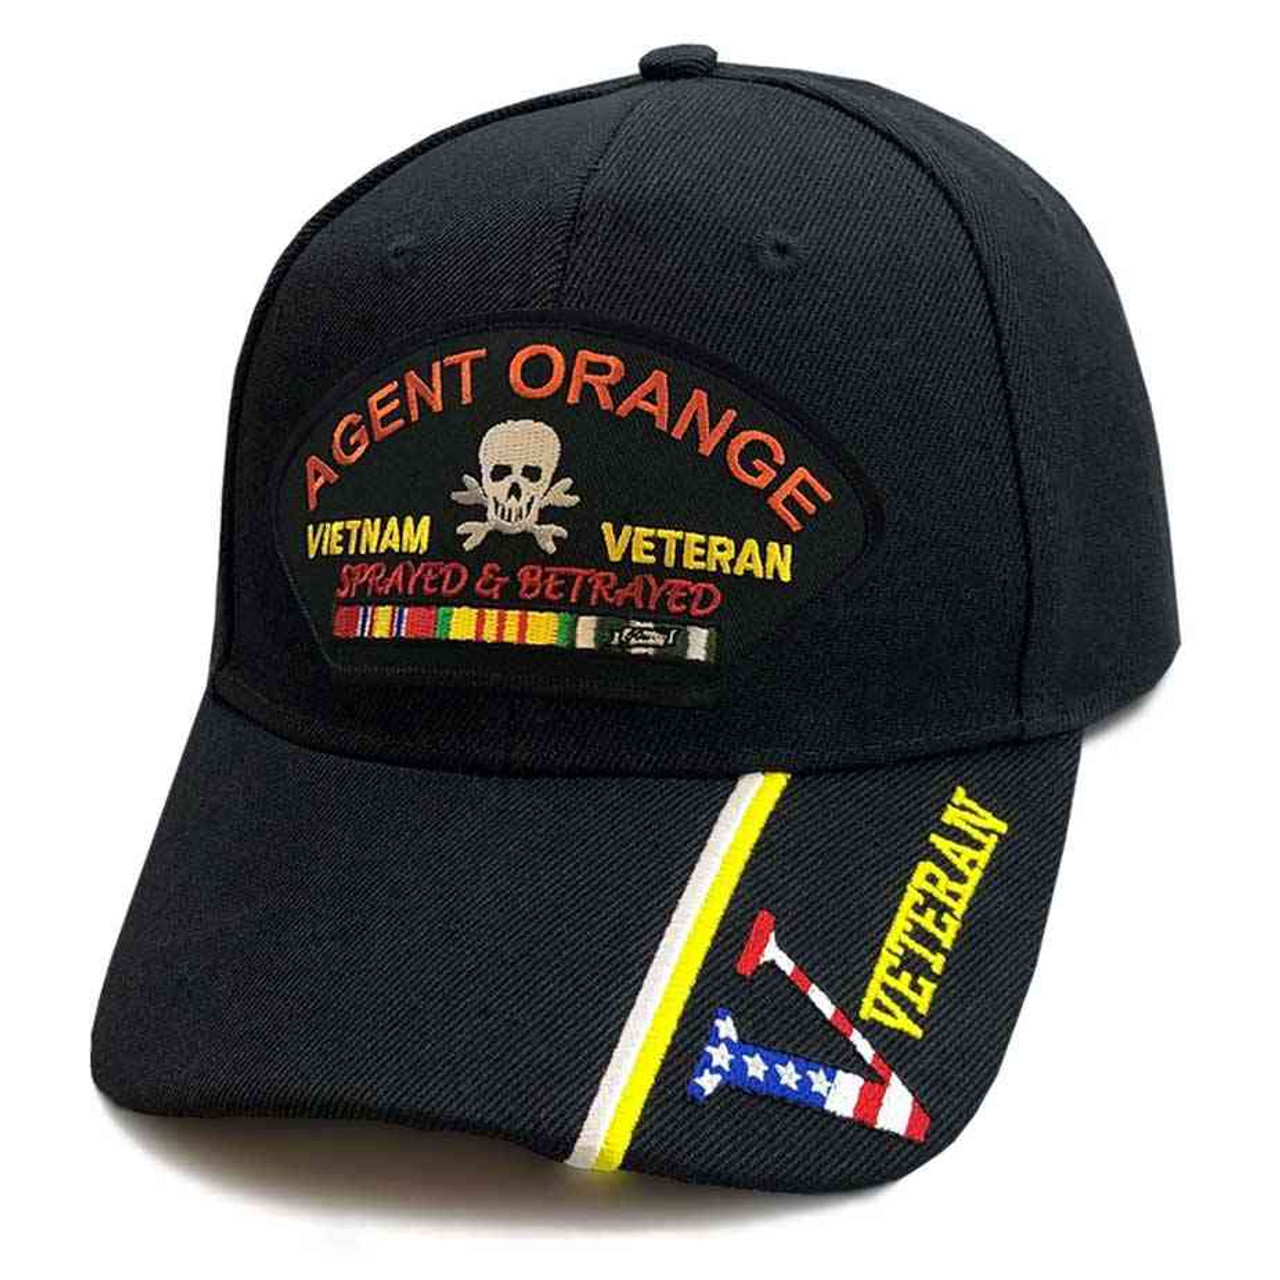 Vietnam Veteran Hat with Agent Orange and V Veteran